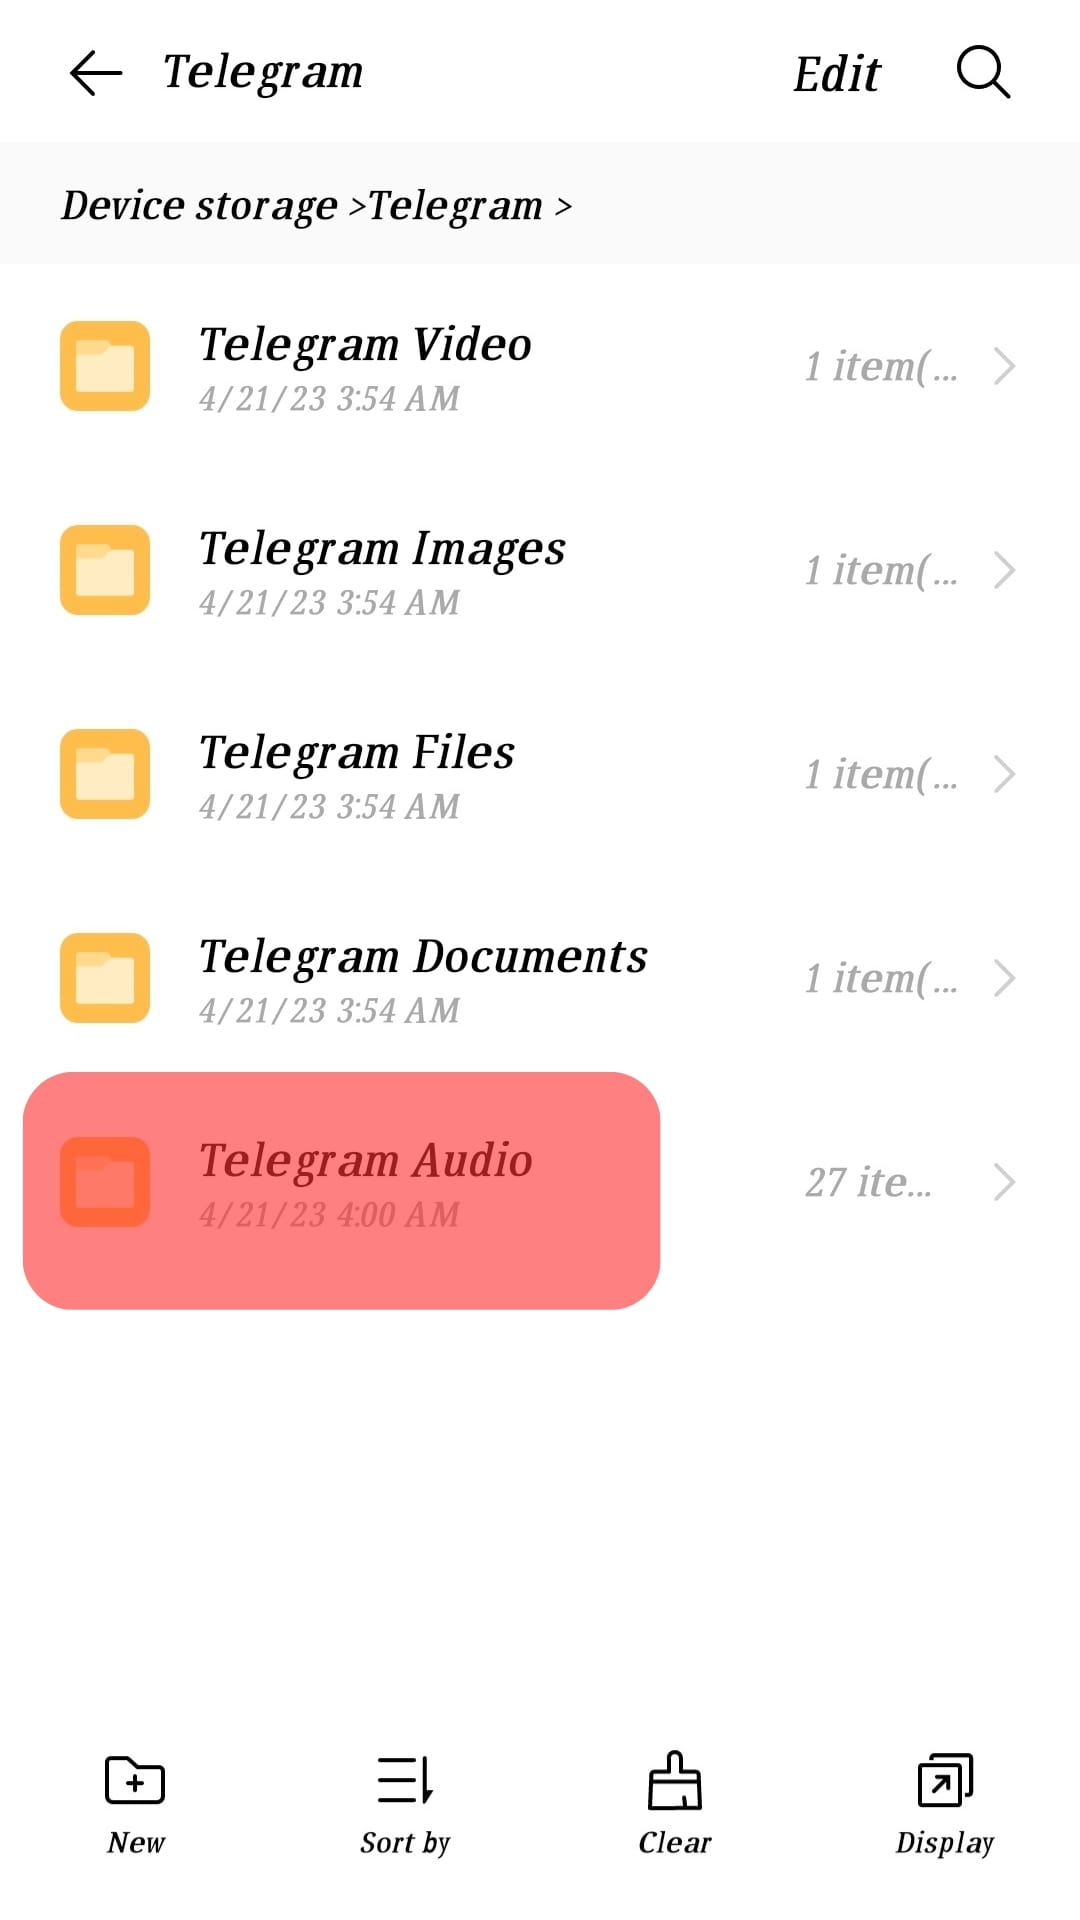 Telegram Audio Subdirectory